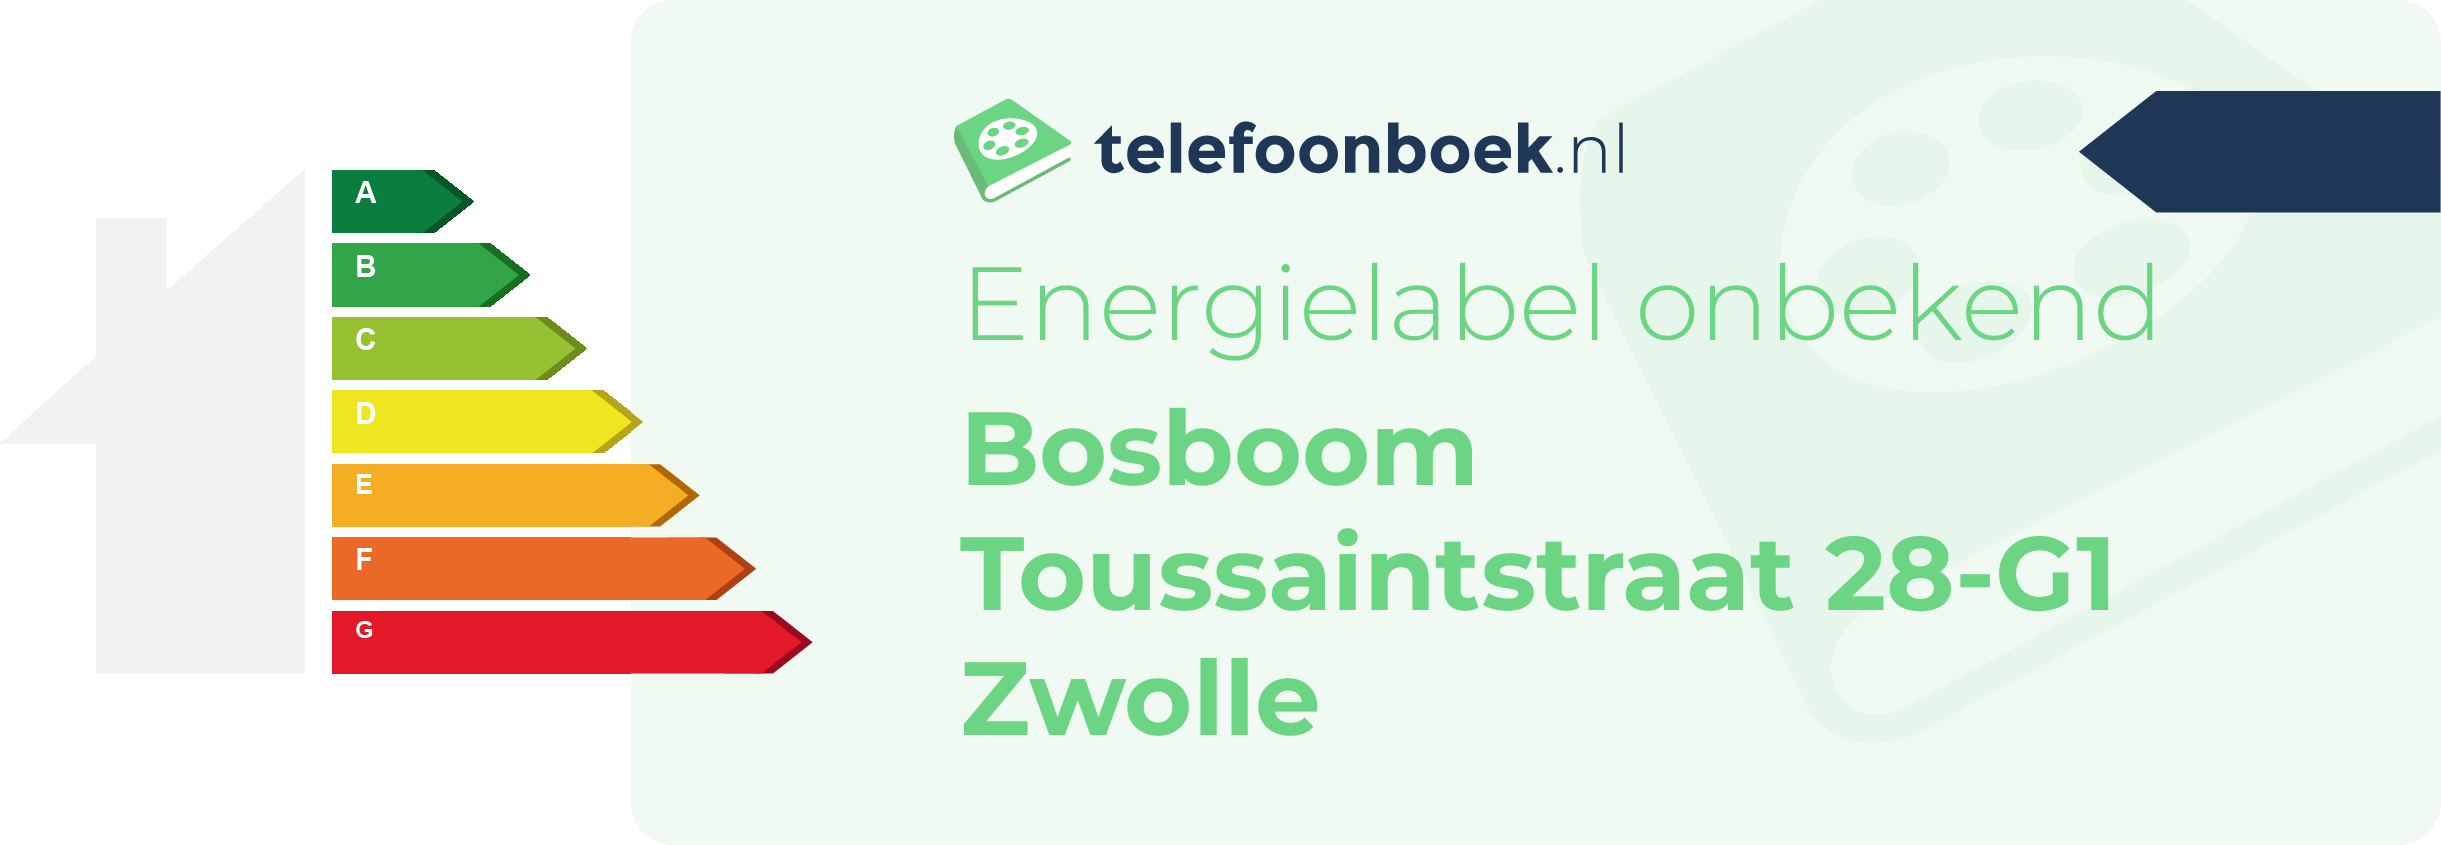 Energielabel Bosboom Toussaintstraat 28-G1 Zwolle